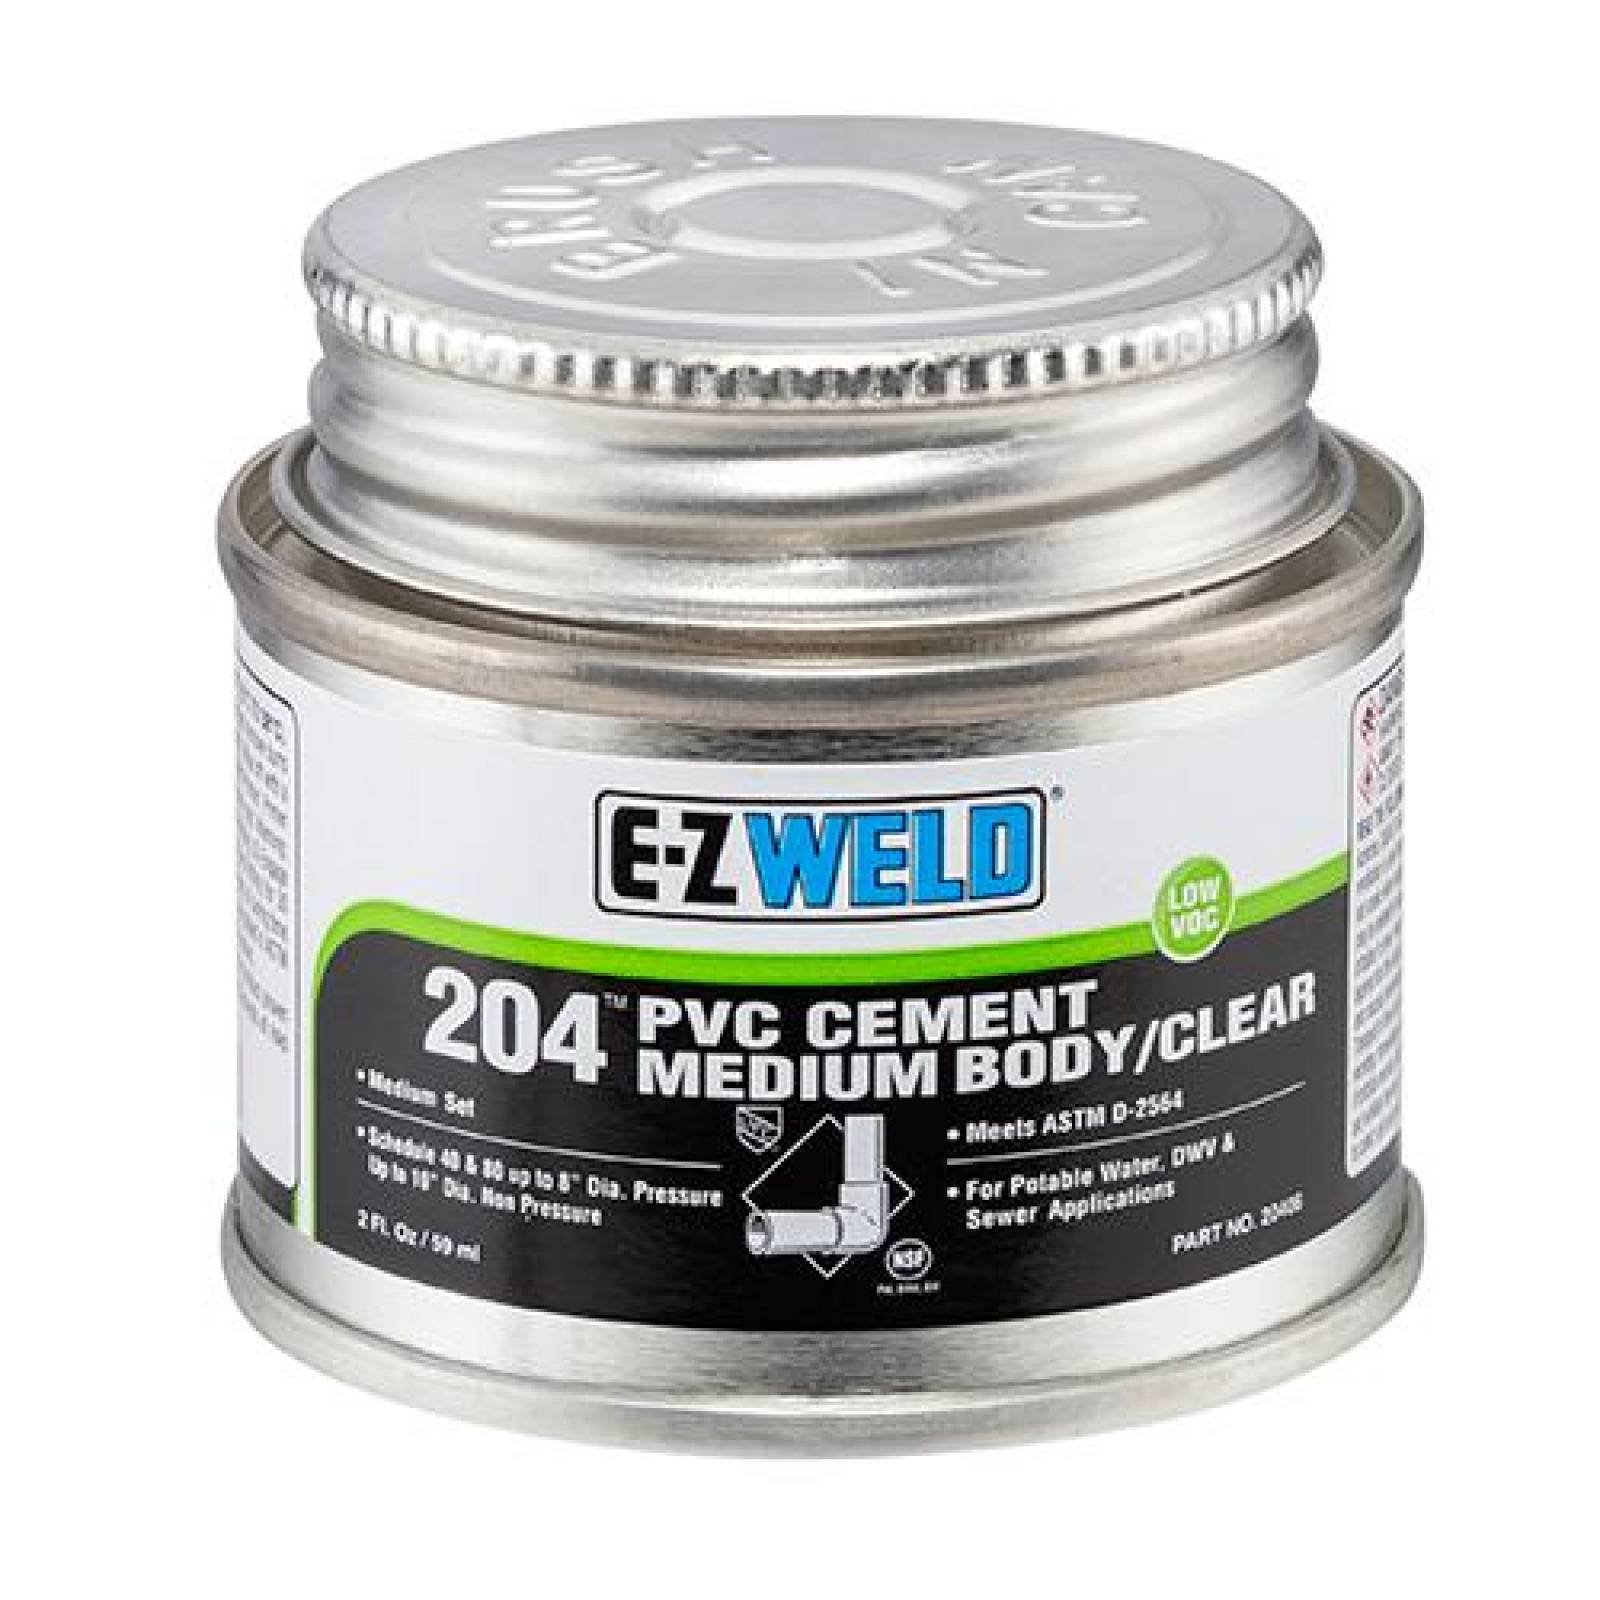 Cemento PVC C80, mod. 204 azul, E-Z WELD 240ml 